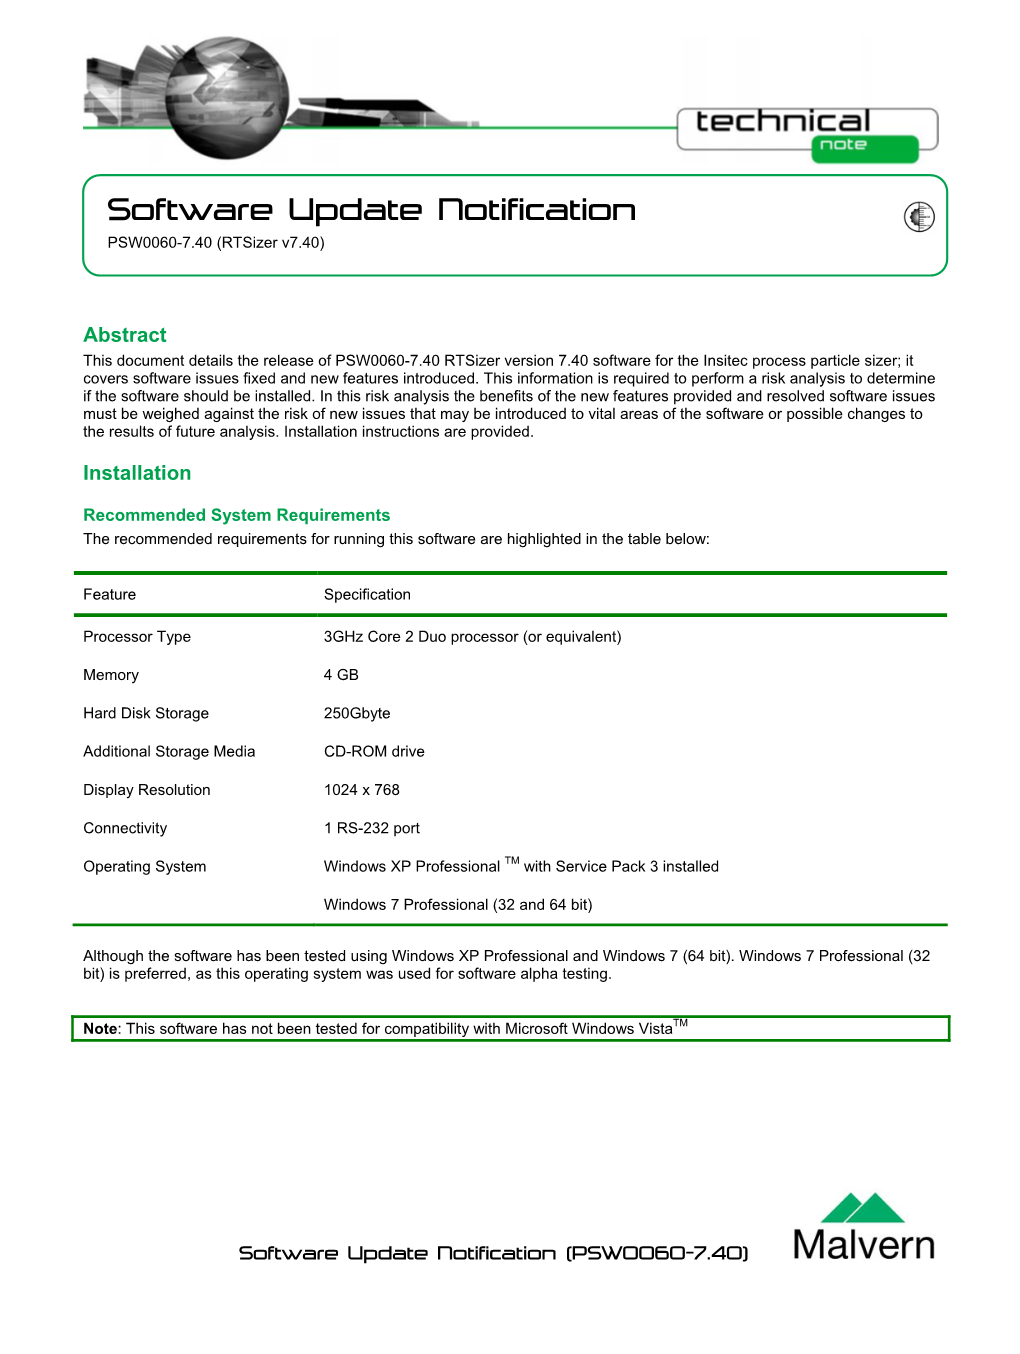 Software Update Notification PSW0060-7.40 (Rtsizer V7.40)